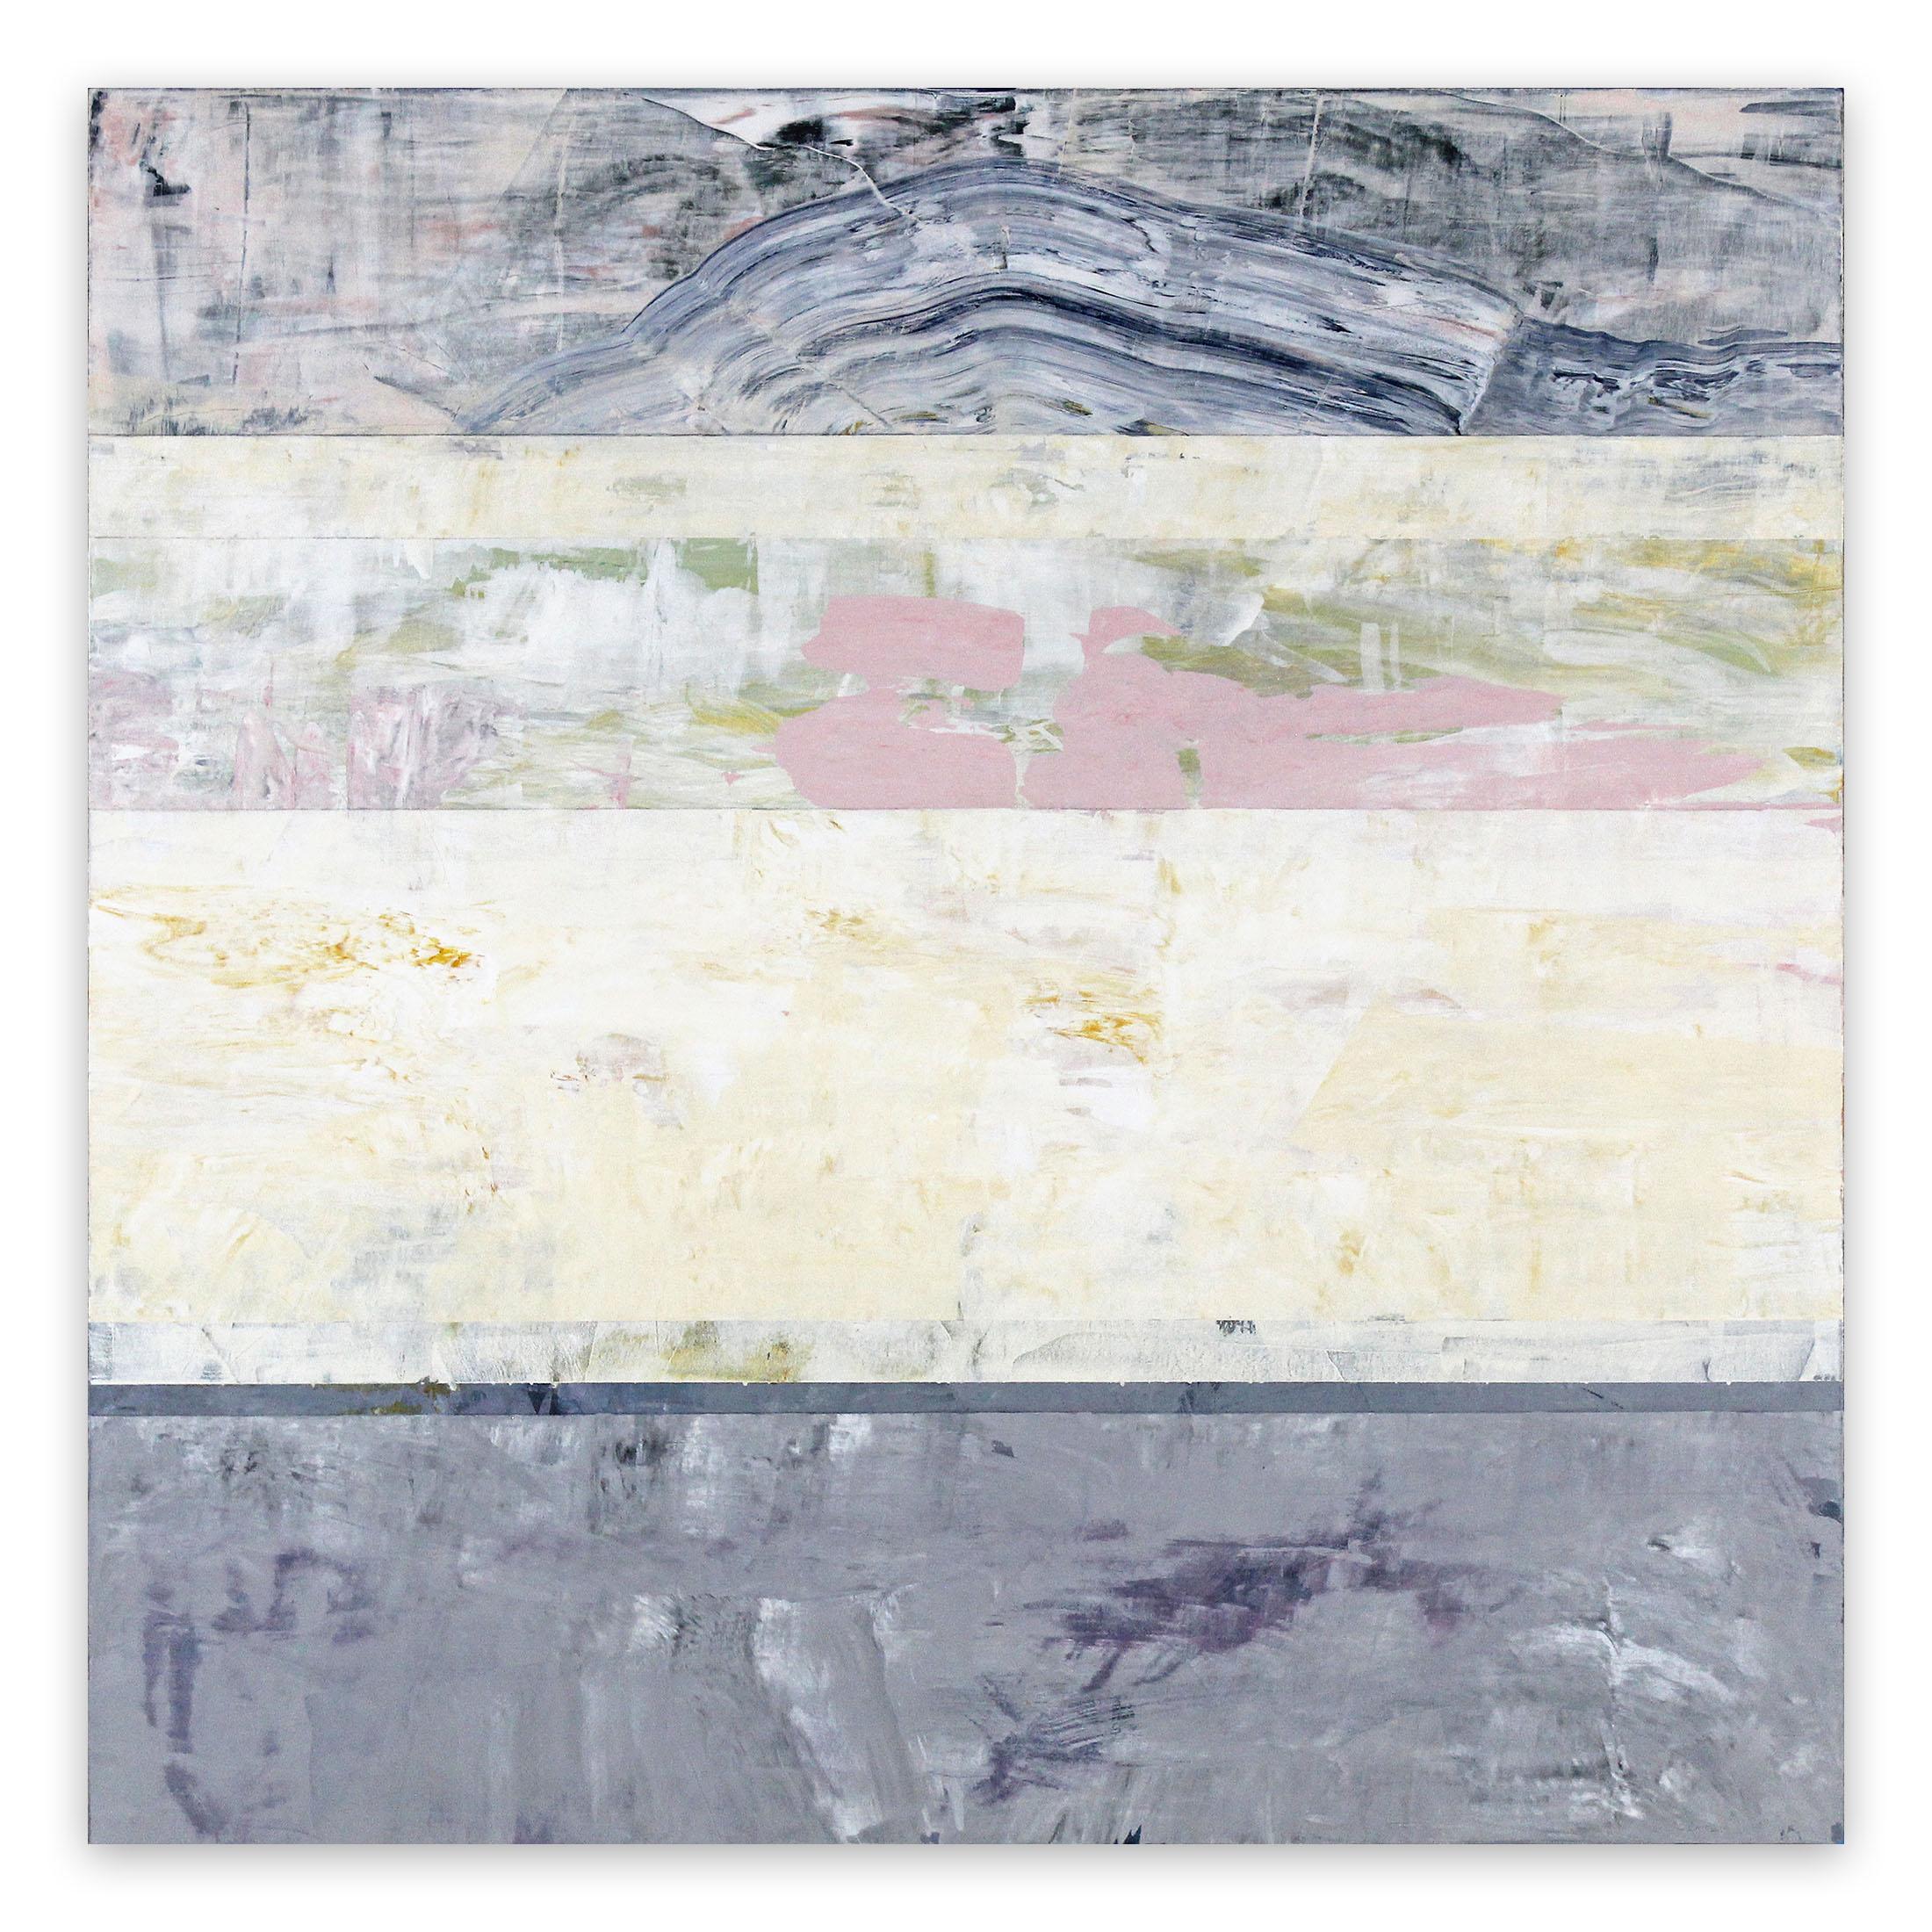 Abstract Painting Clay Johnson - Ce que j'ai entendu (peinture abstraite)